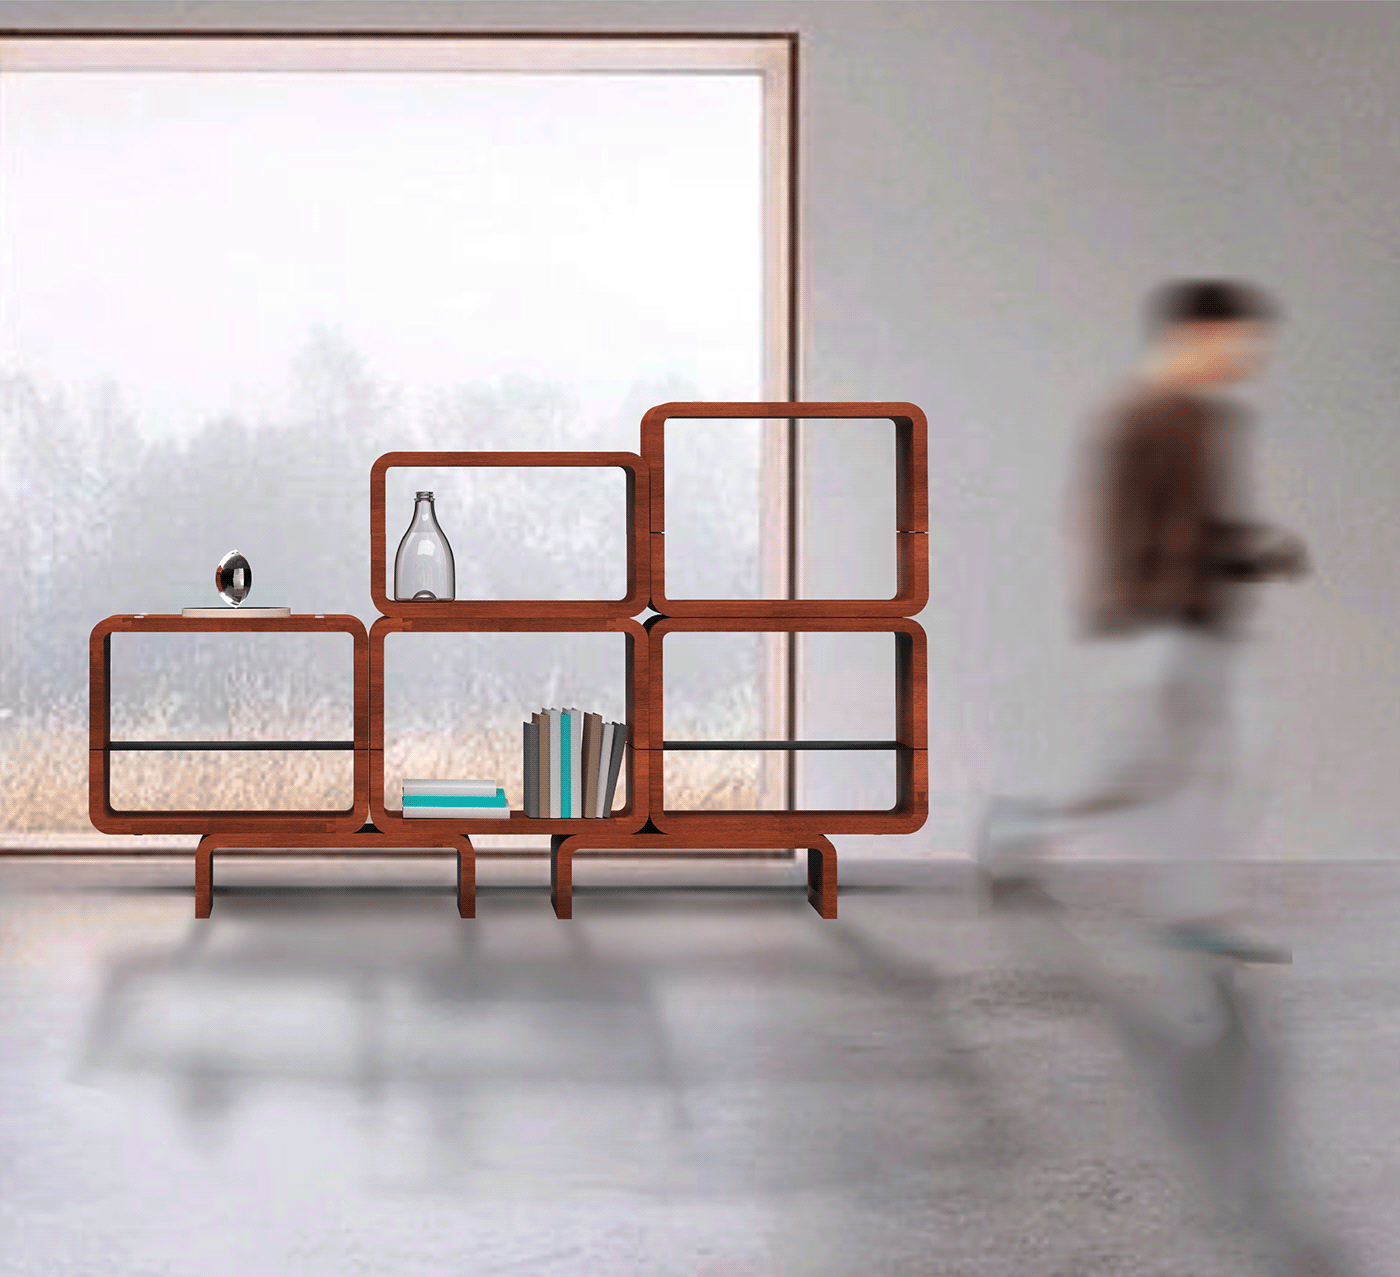 furniture modular product design  riva sideboard